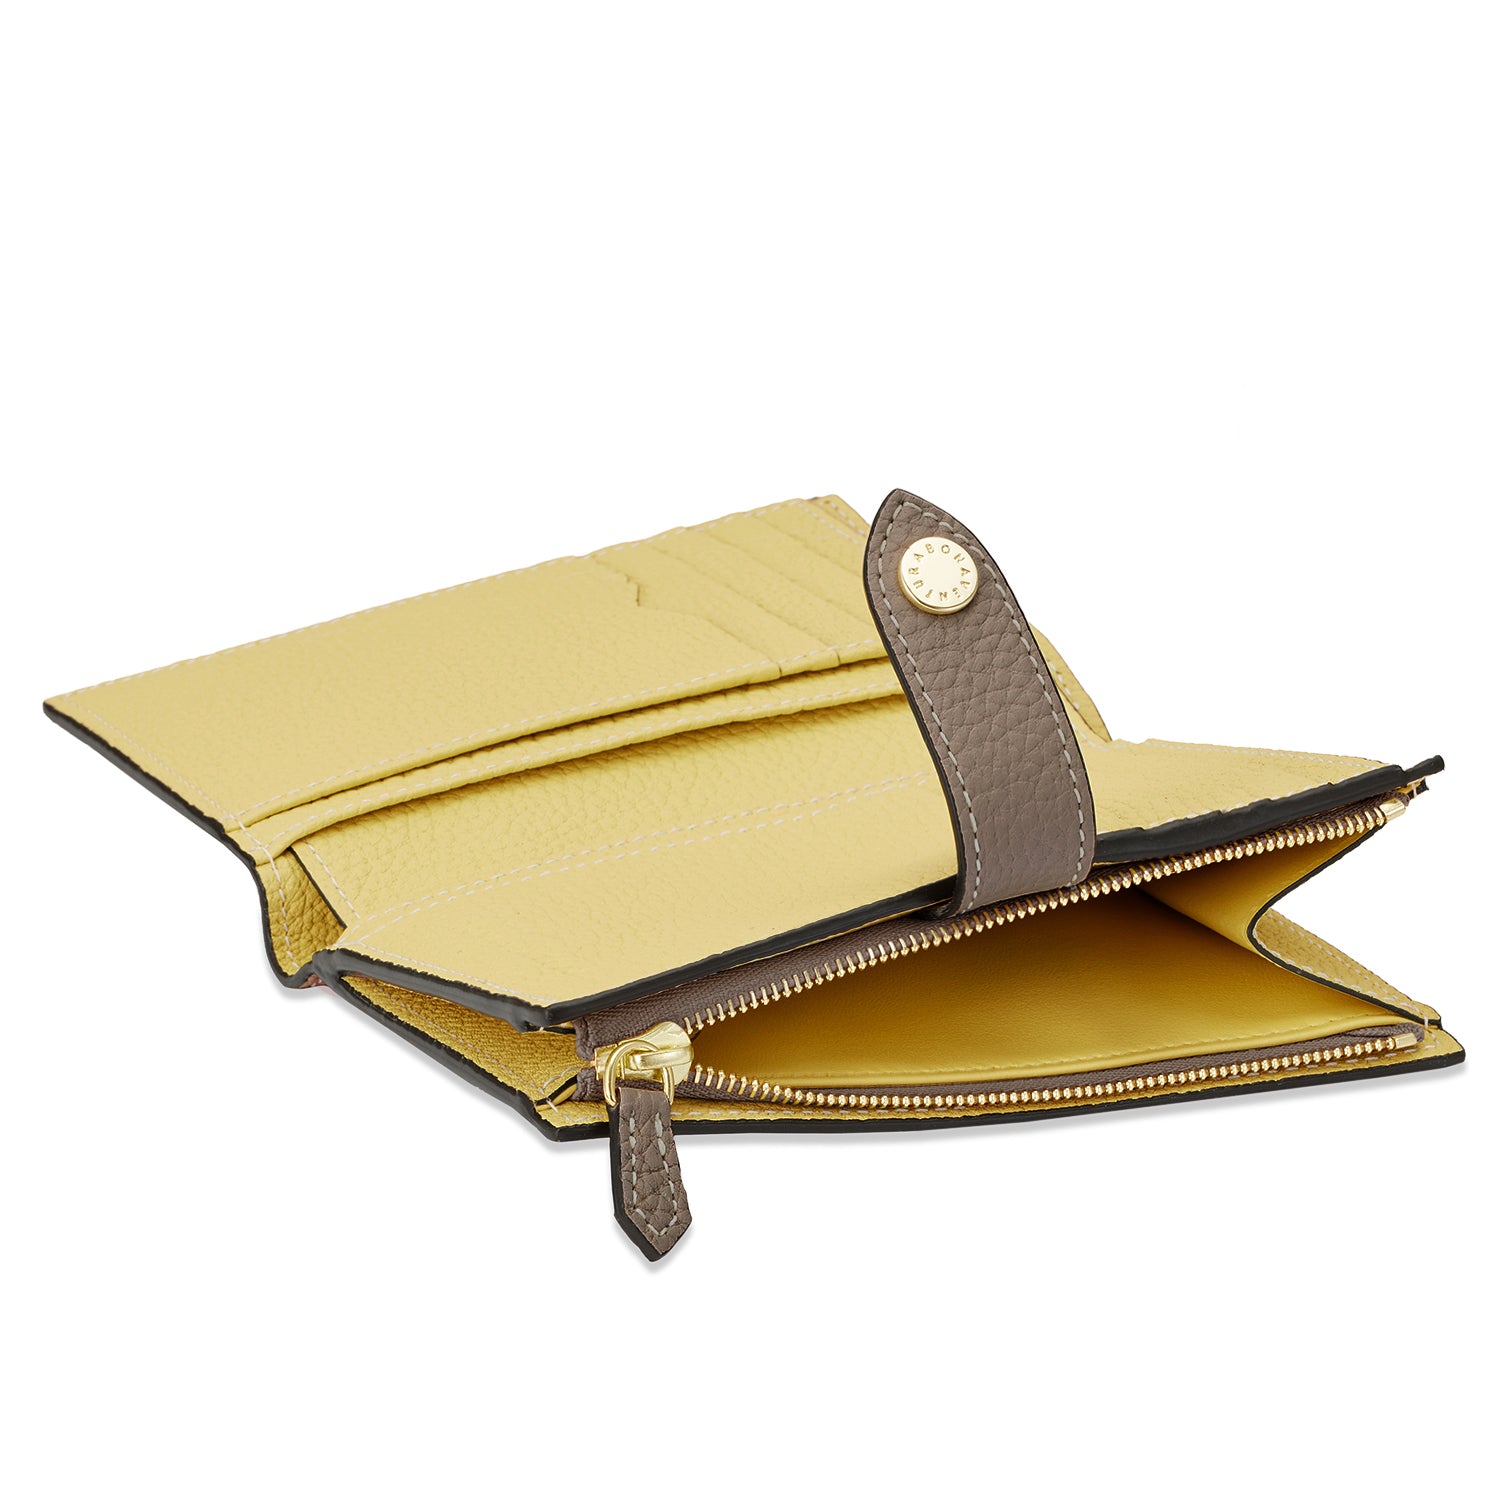 Belted multi medium wallet in shrunk leather